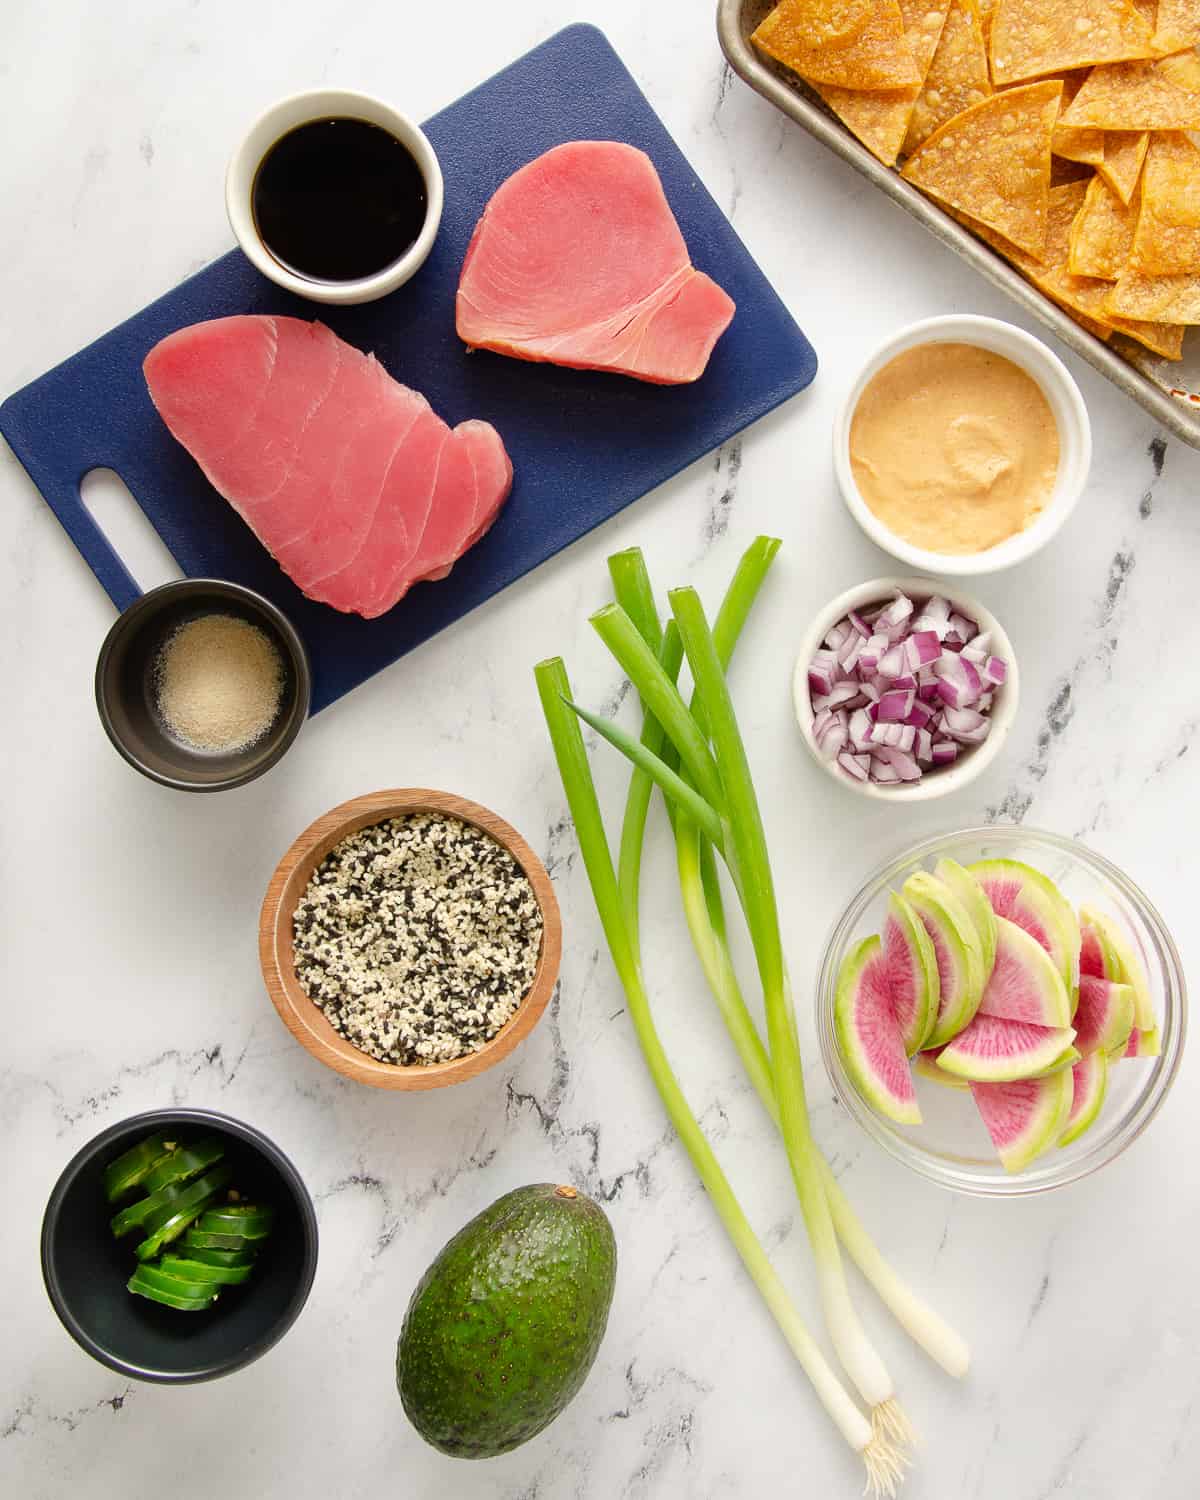 Ingredients for ahi tuna nachos on a white countertop.